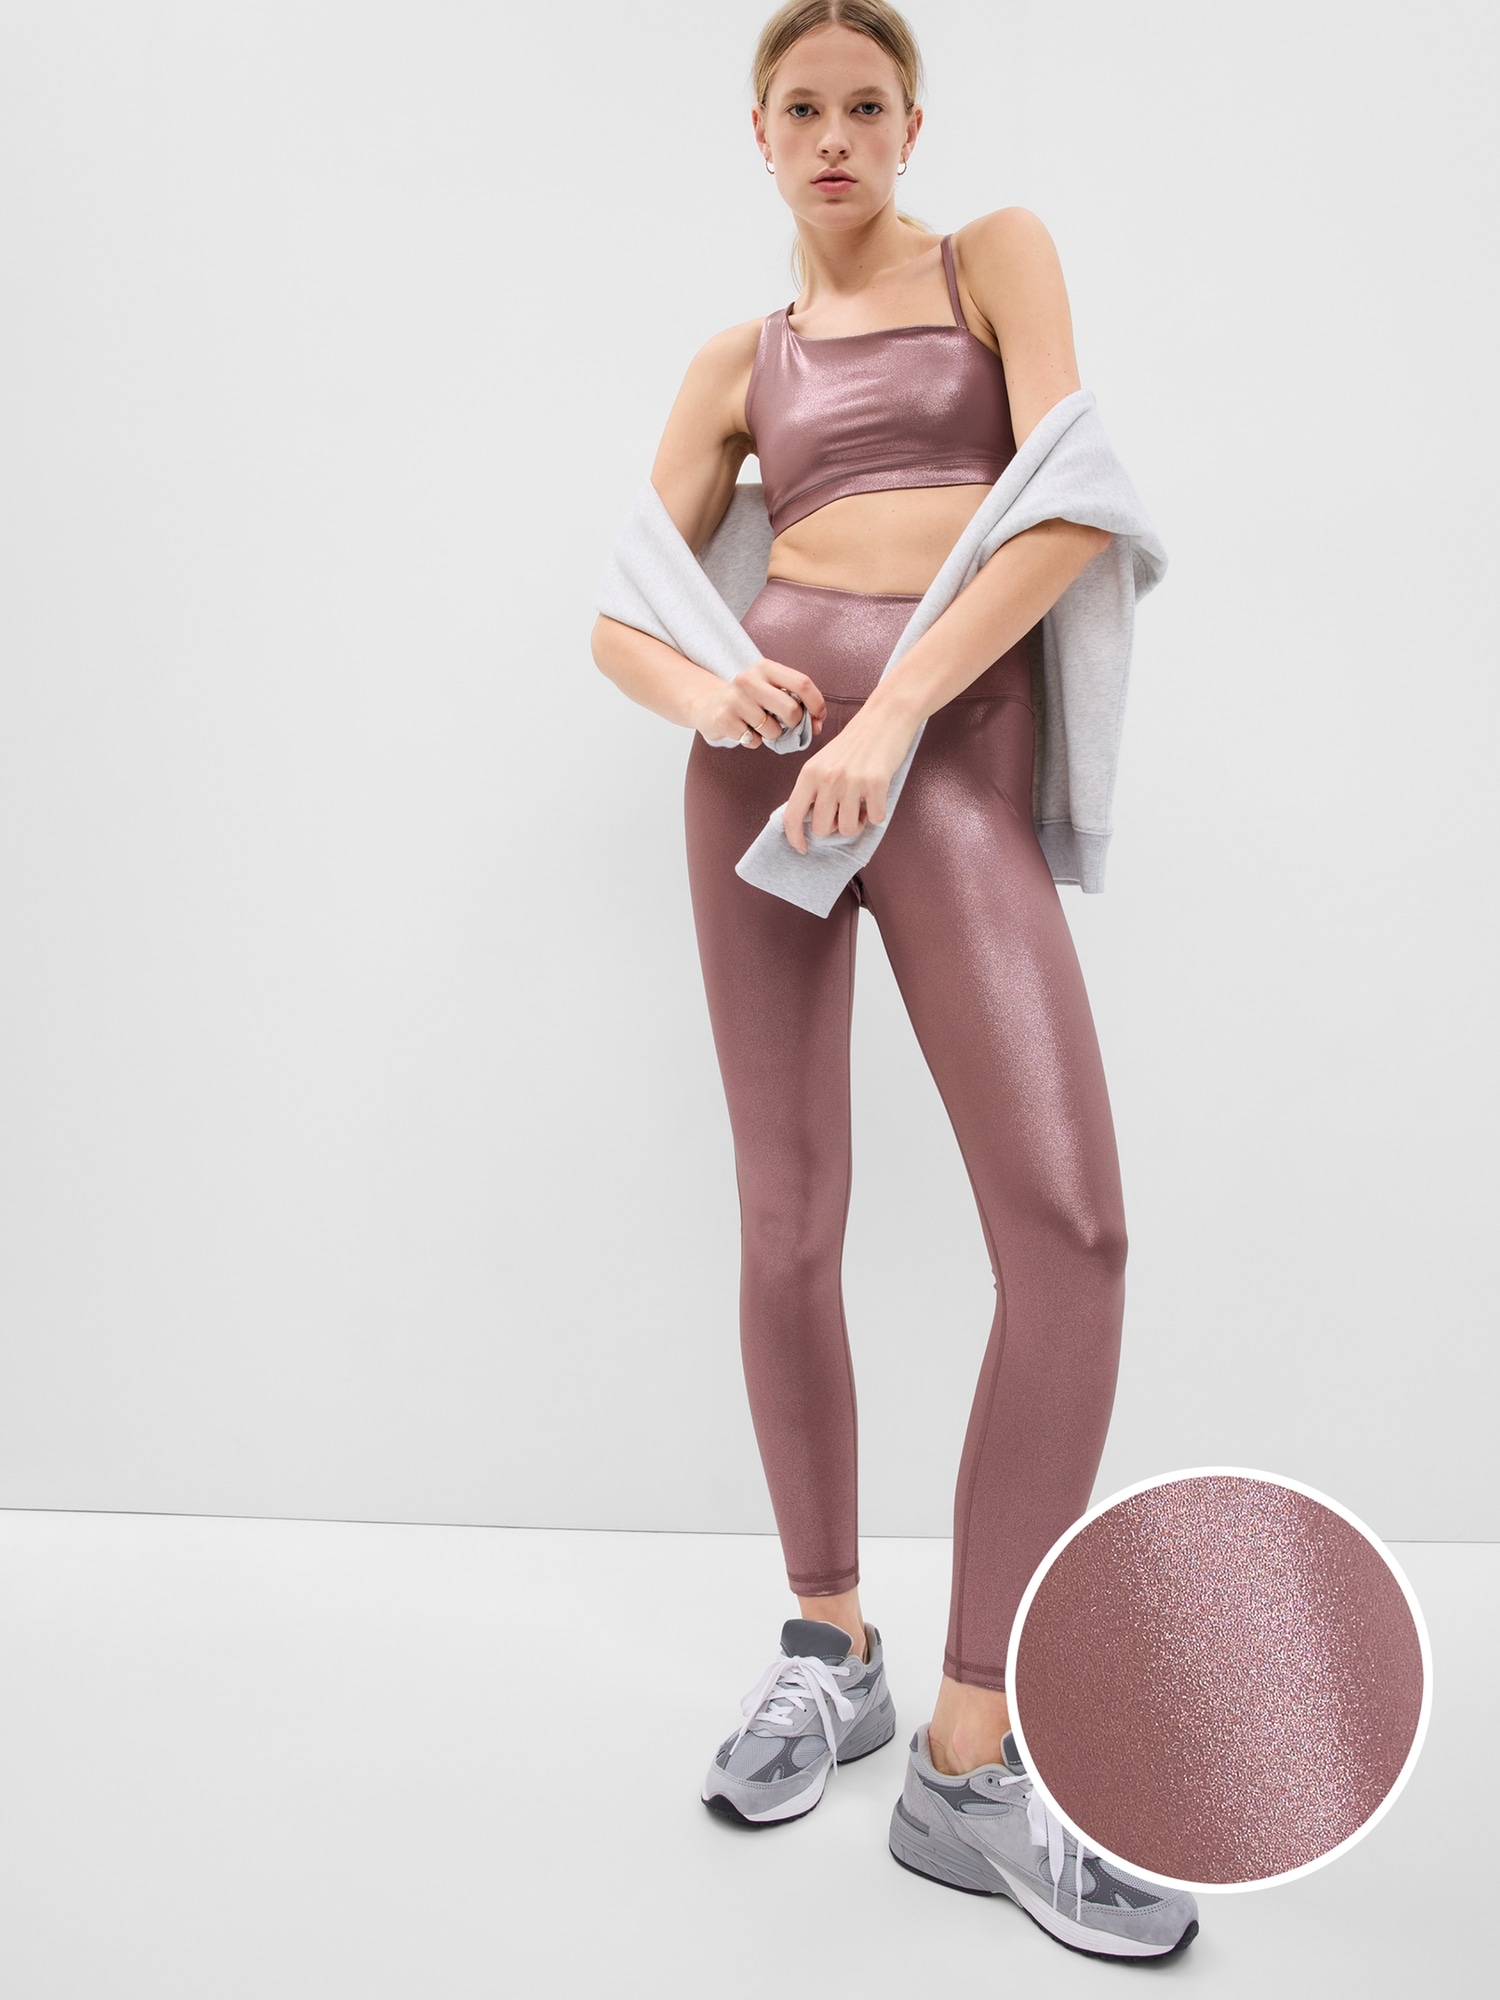 Nwt Gap Fit Women's Gray Compression Leggings Athletic shiny /Metallic XL  GFast